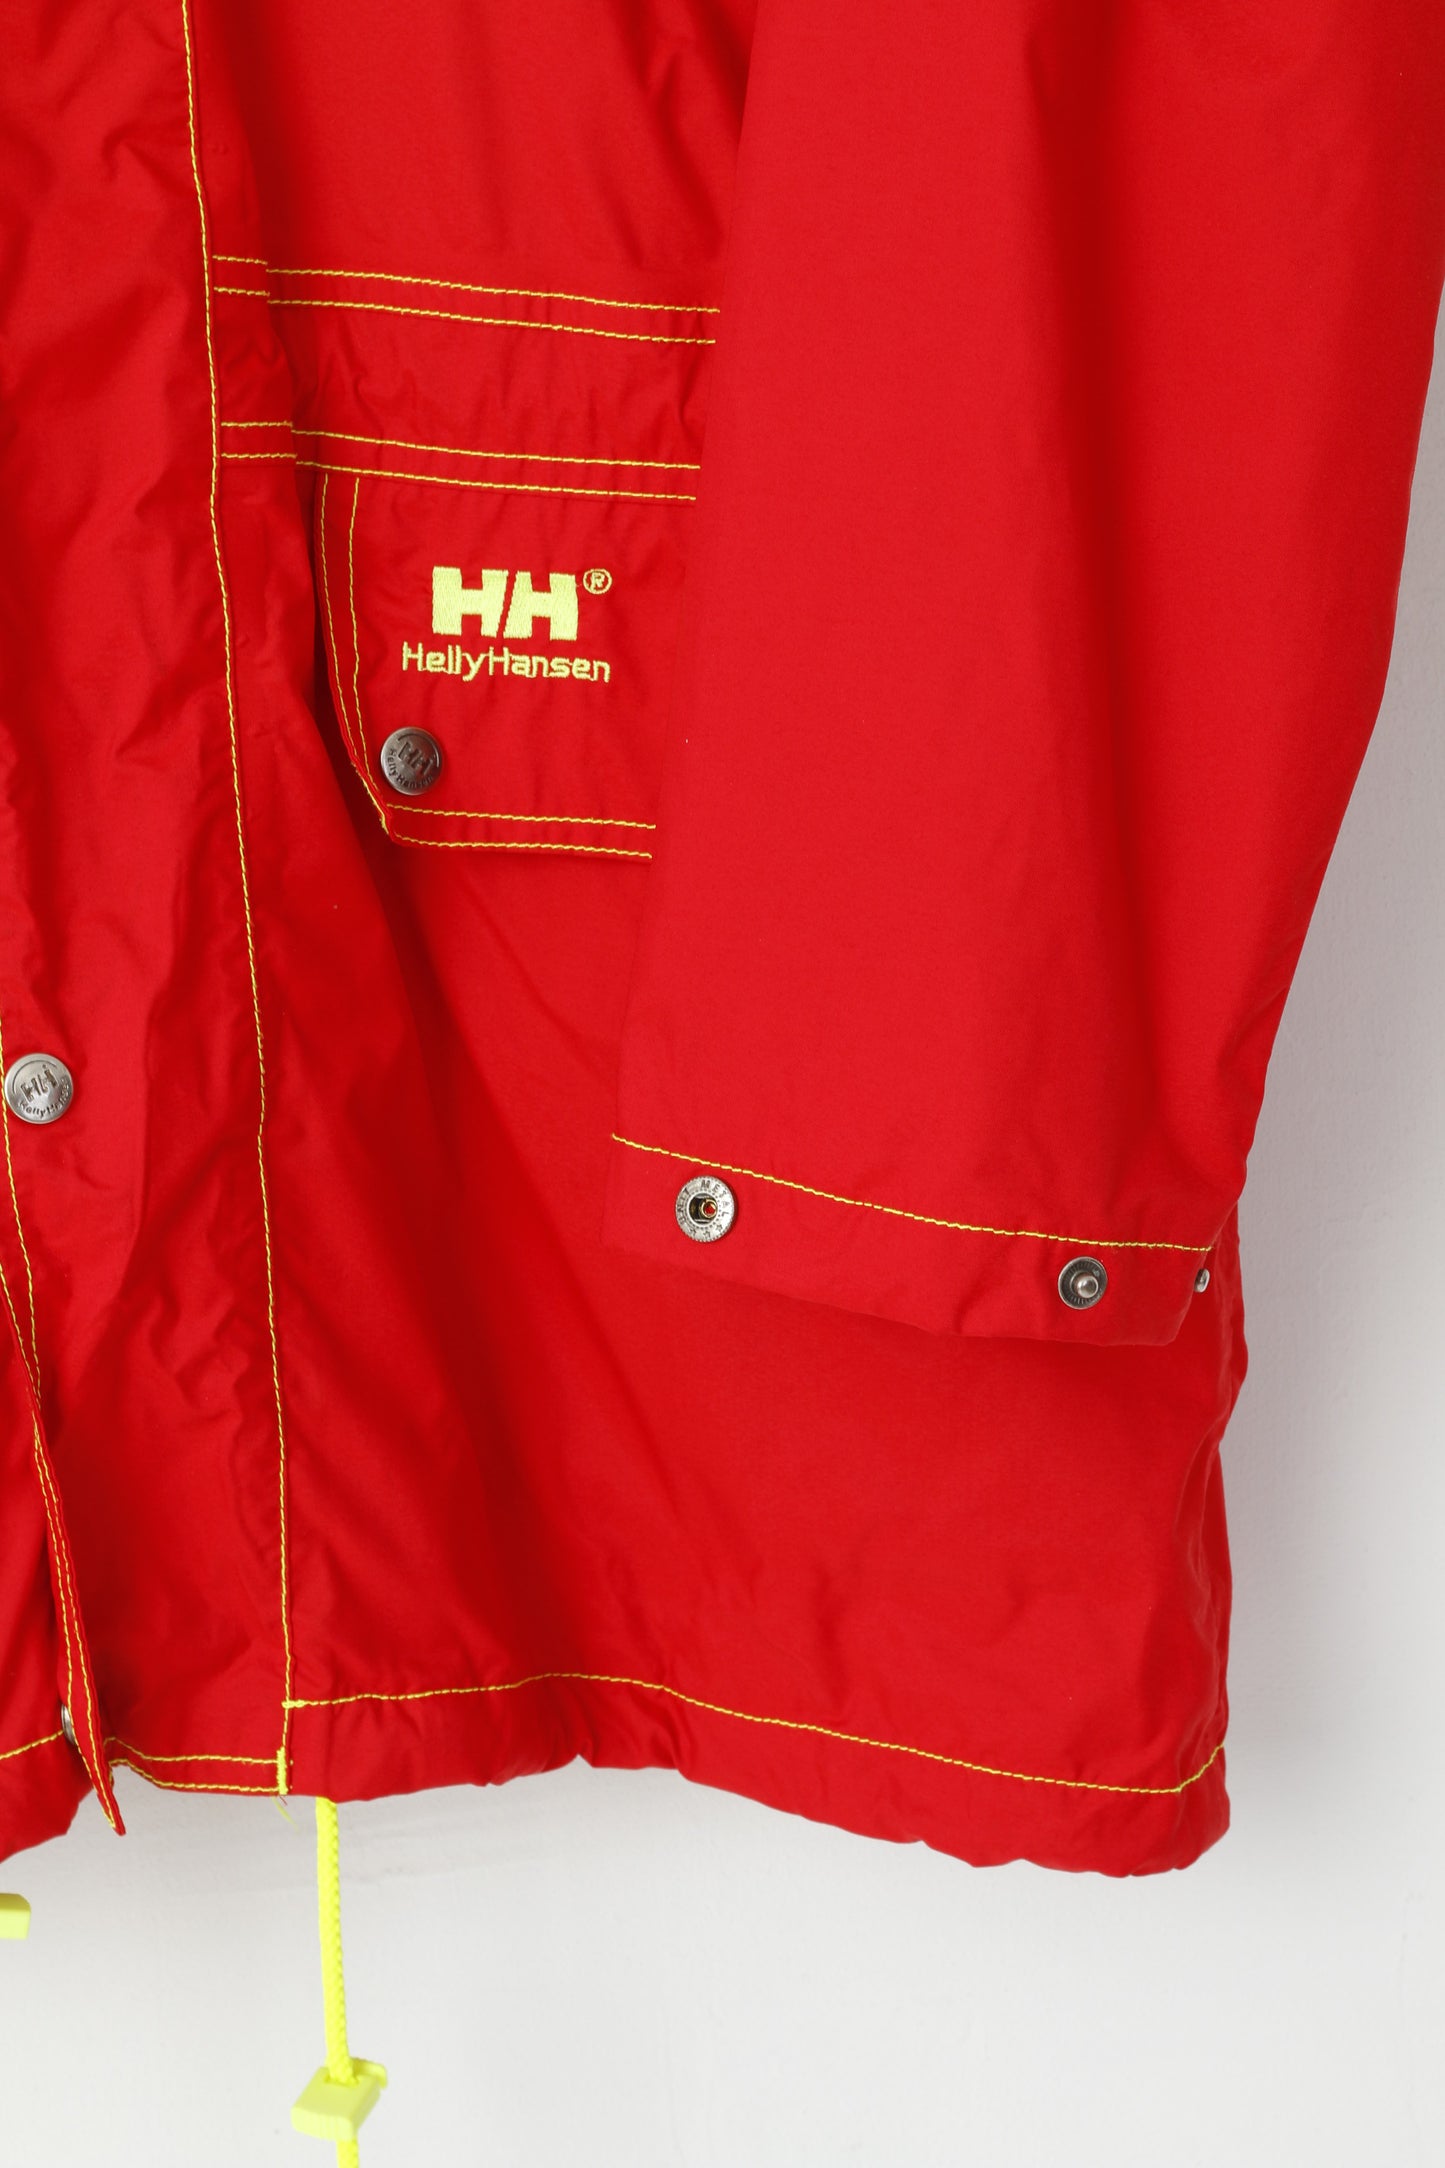 Helly Hansen Men L Jacket Red Outdoor Hooded Parka Full Zipper Sailing Top